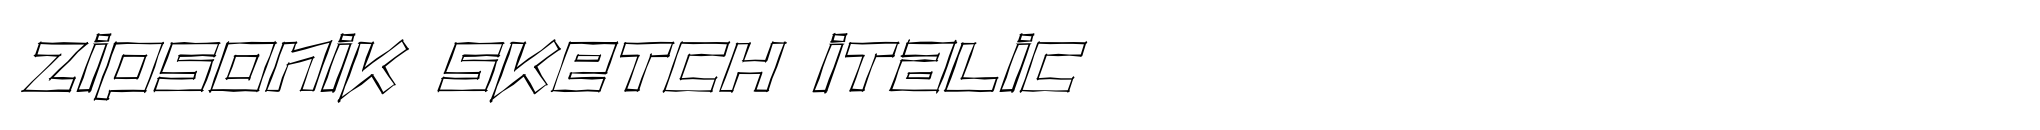 ZipSonik Sketch Italic image